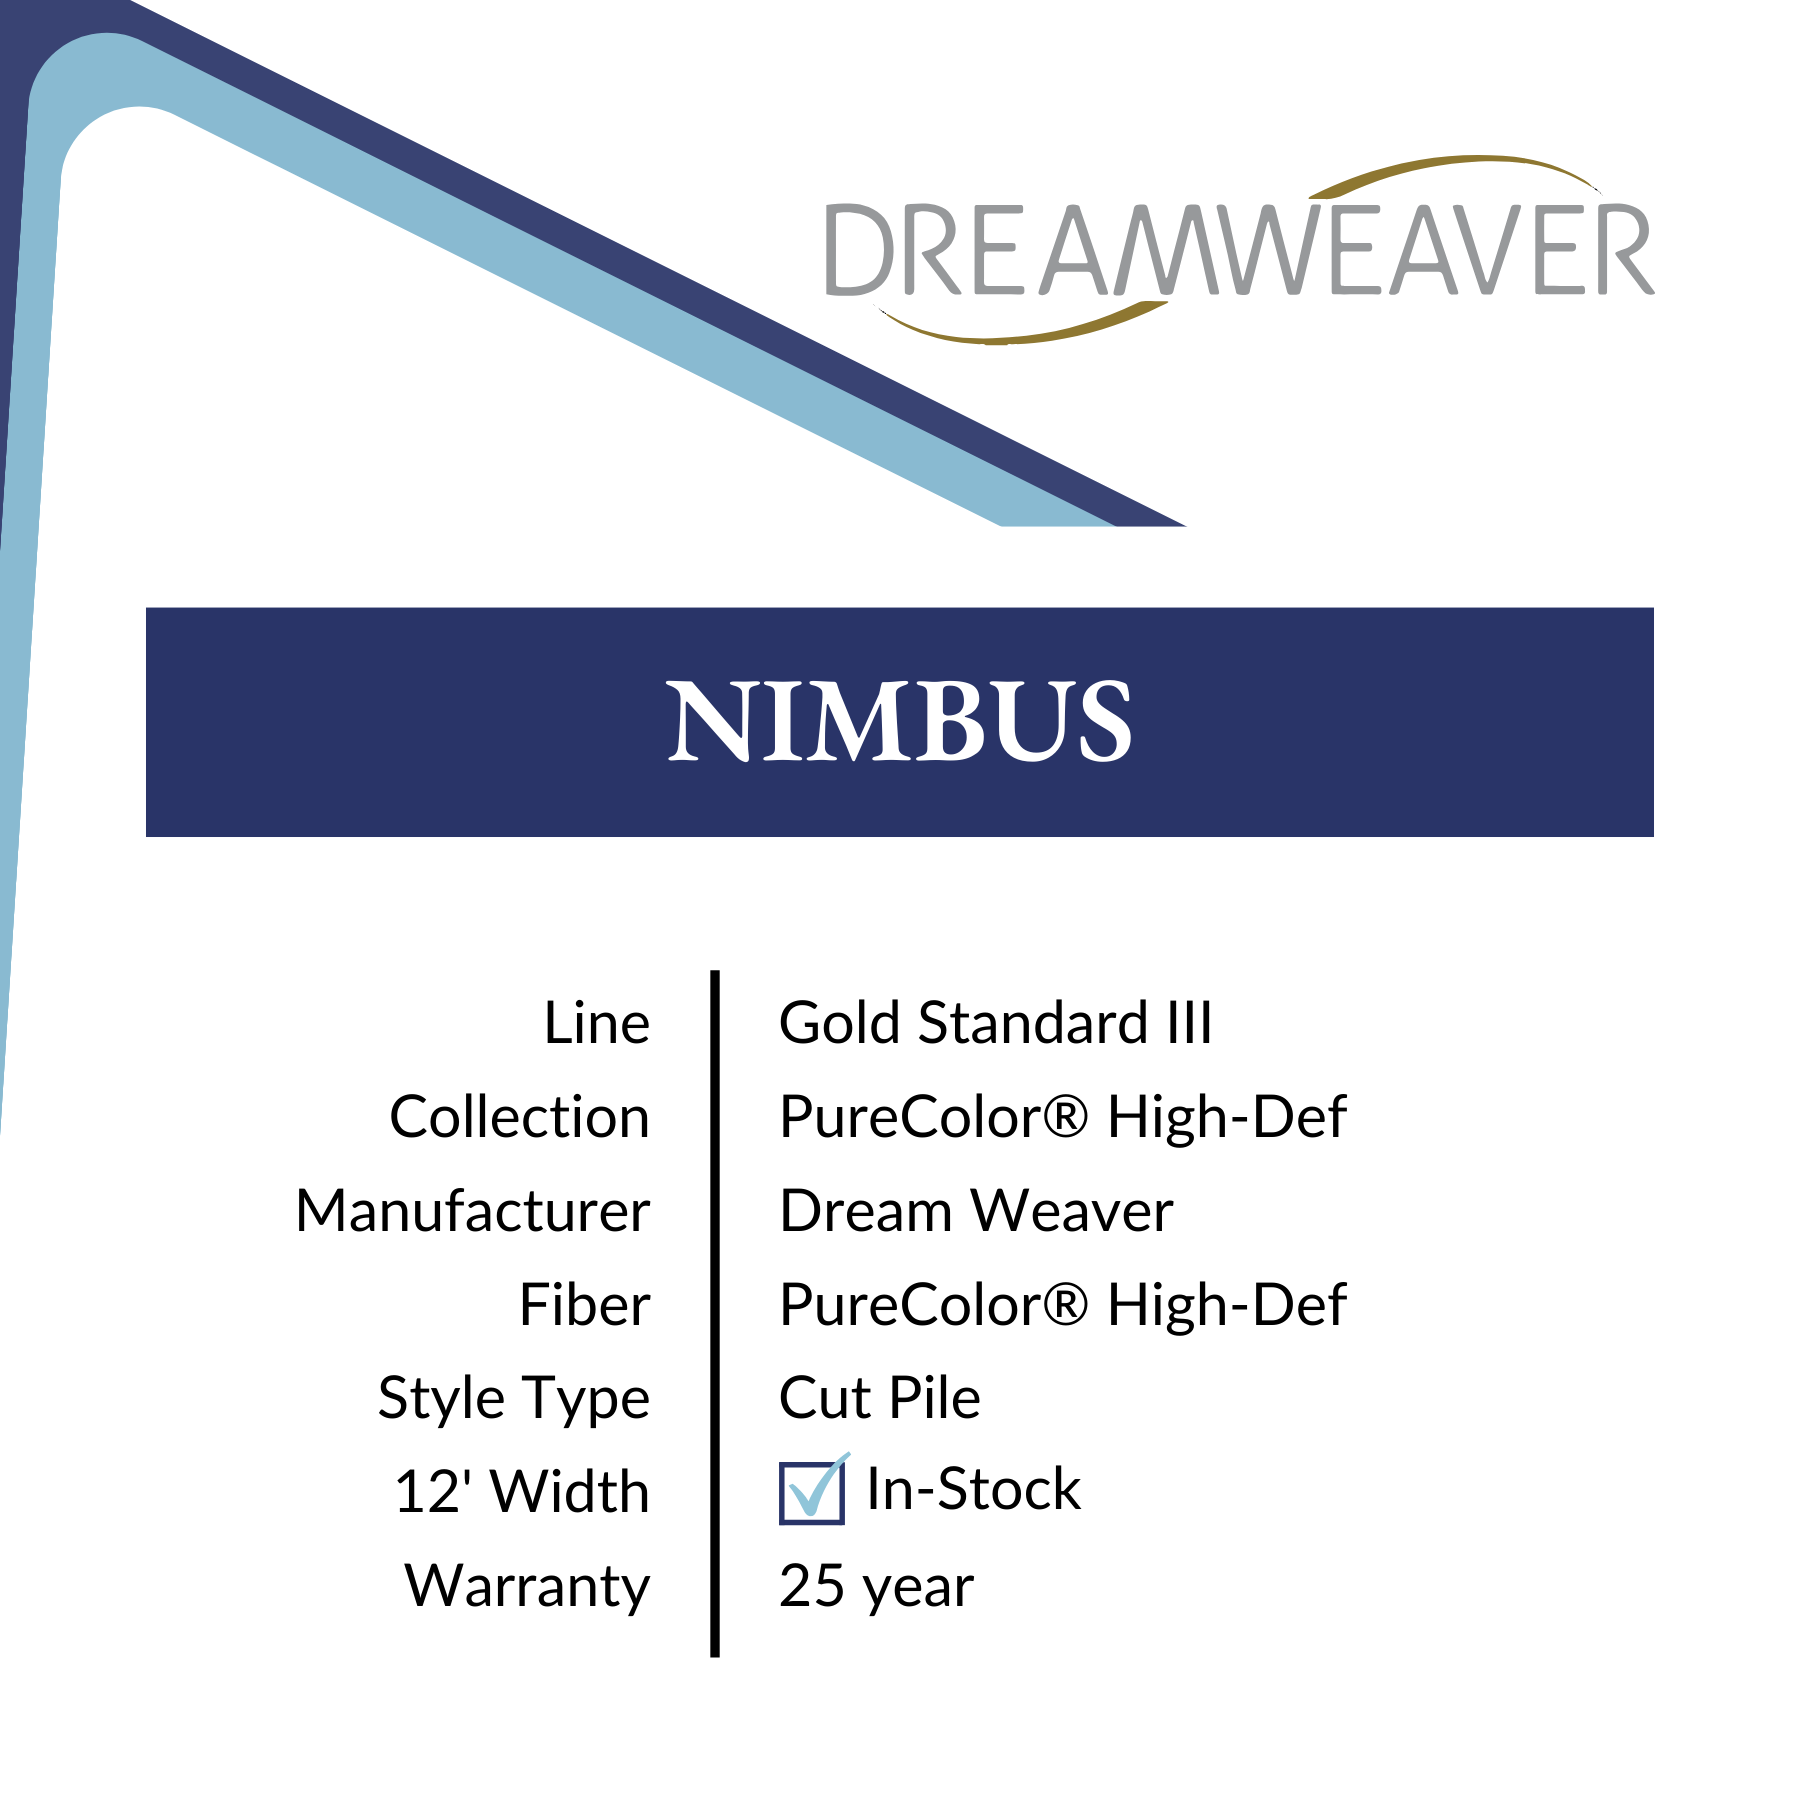 Nimbus, Gold Standard III, Carpet by Dreamweaver, Calhoun's Flooring Springfield, IL Specs